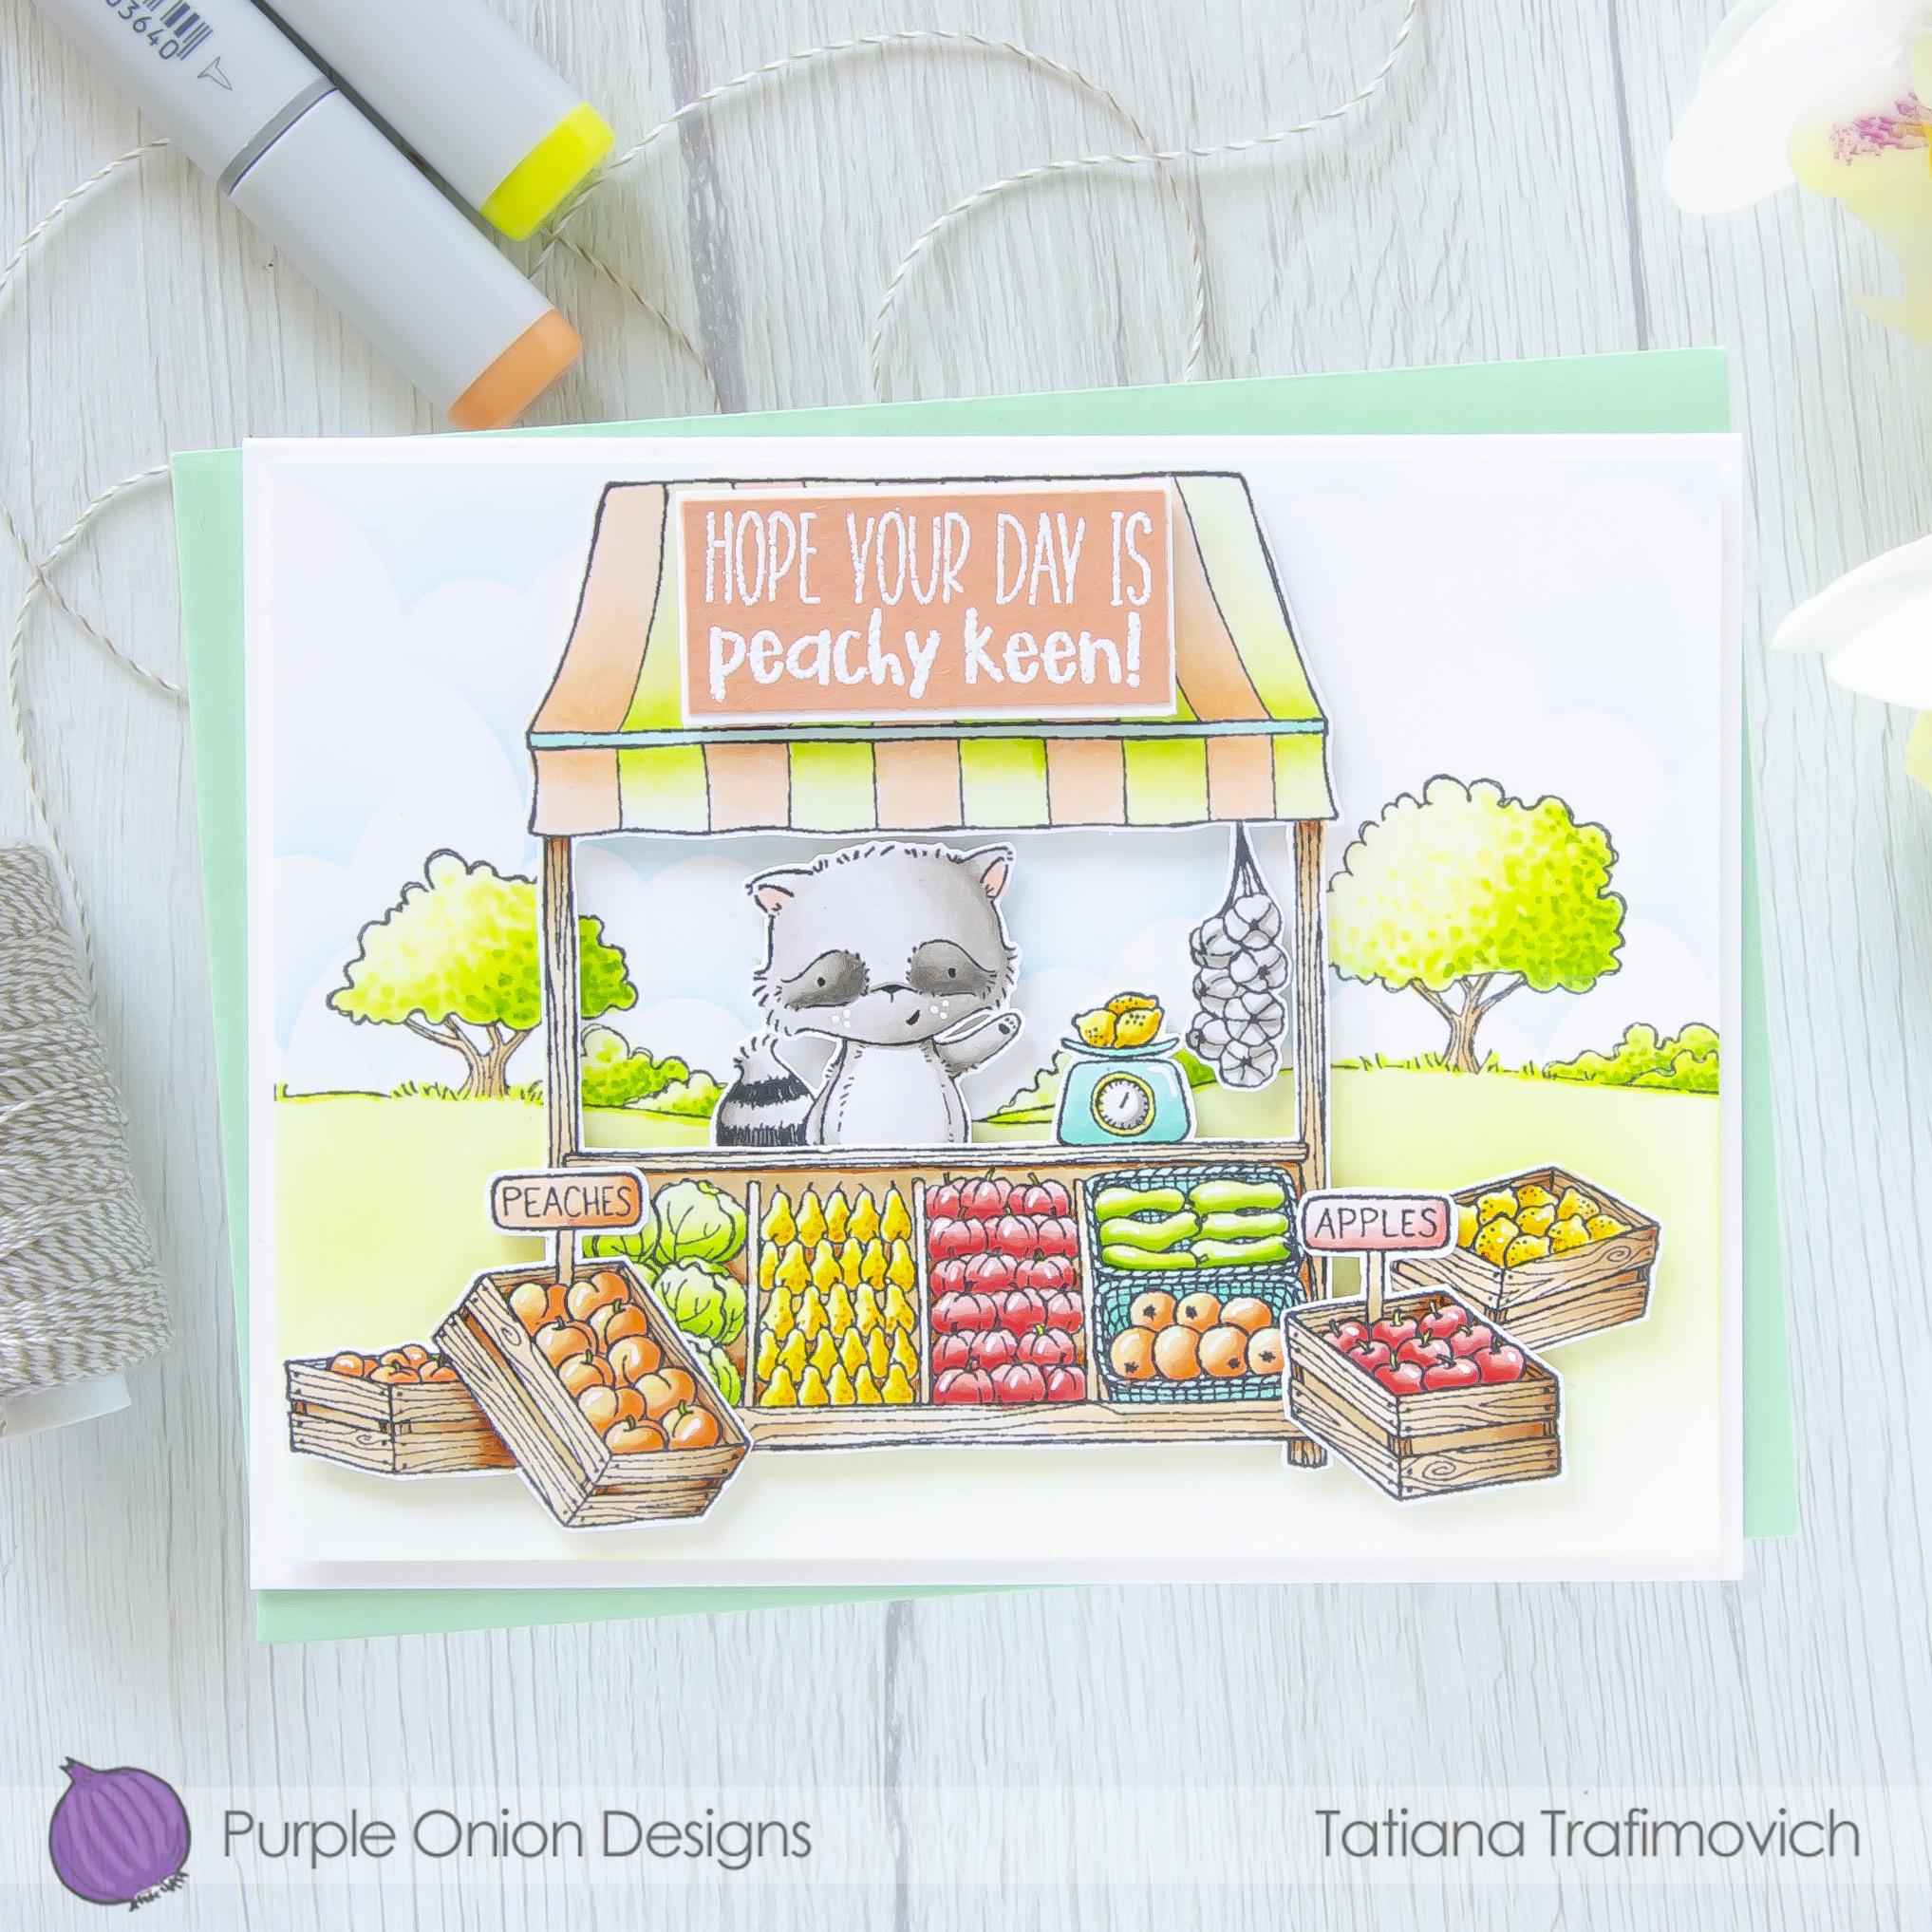 Hope Your Day Is Peachy Keen! #handmade card by Tatiana Trafimovich #tatianacraftandart - stamps by Purple Onion Designs 